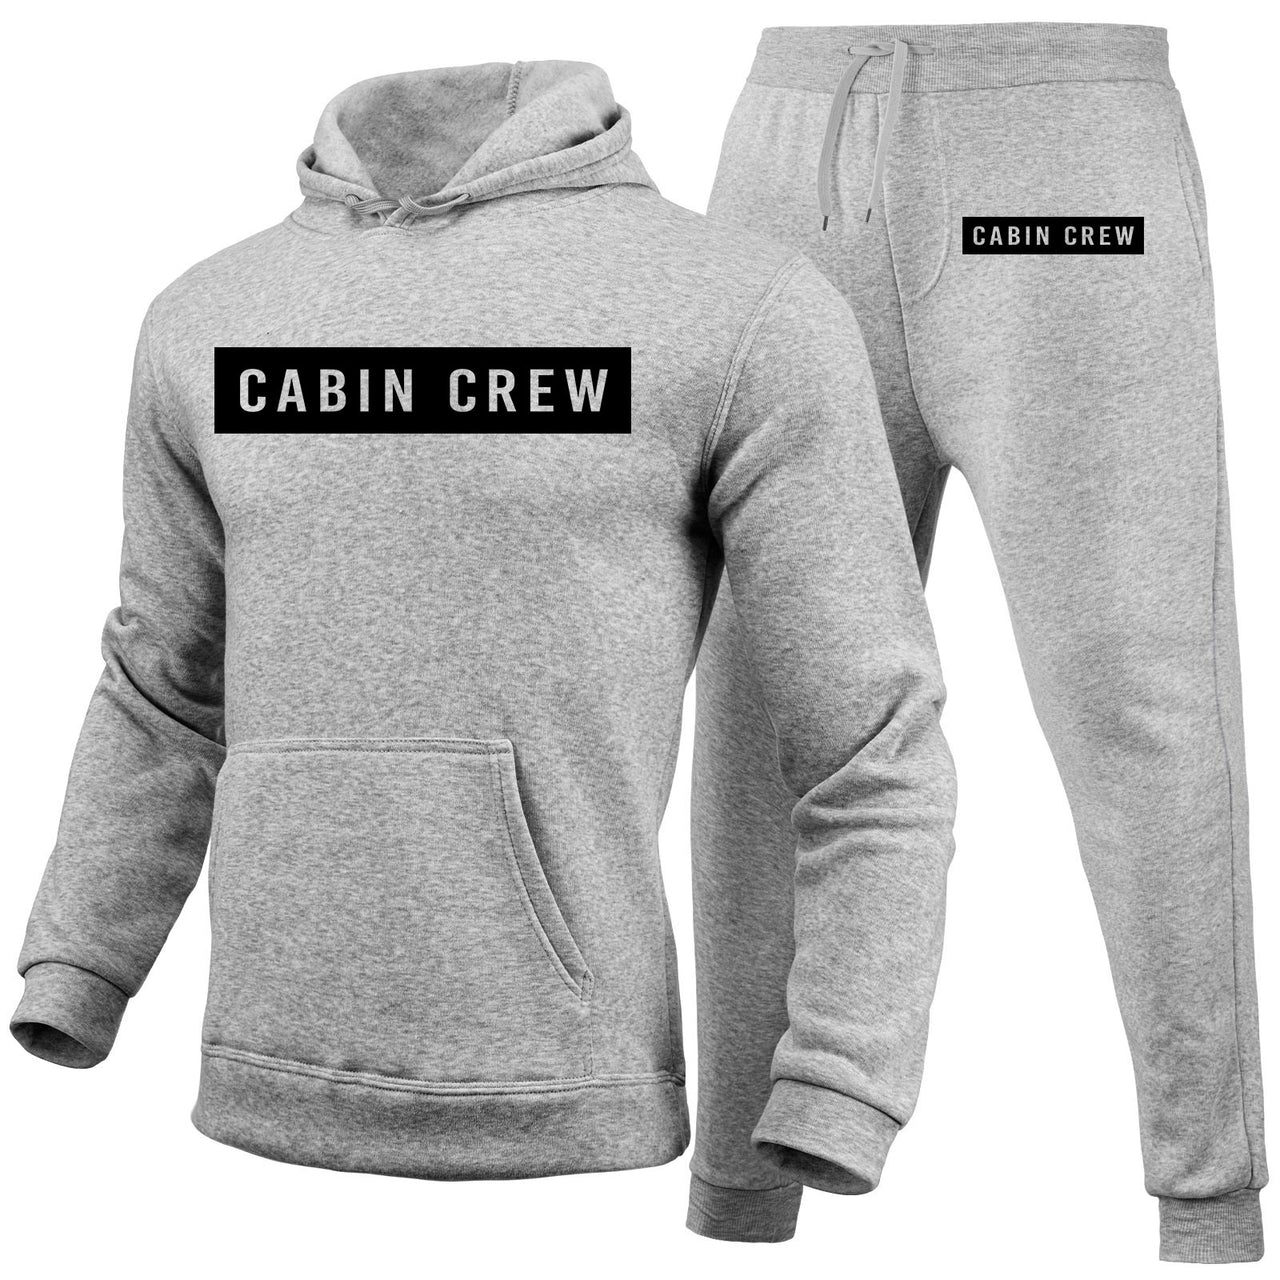 Cabin Crew Text Designed Hoodies & Sweatpants Set